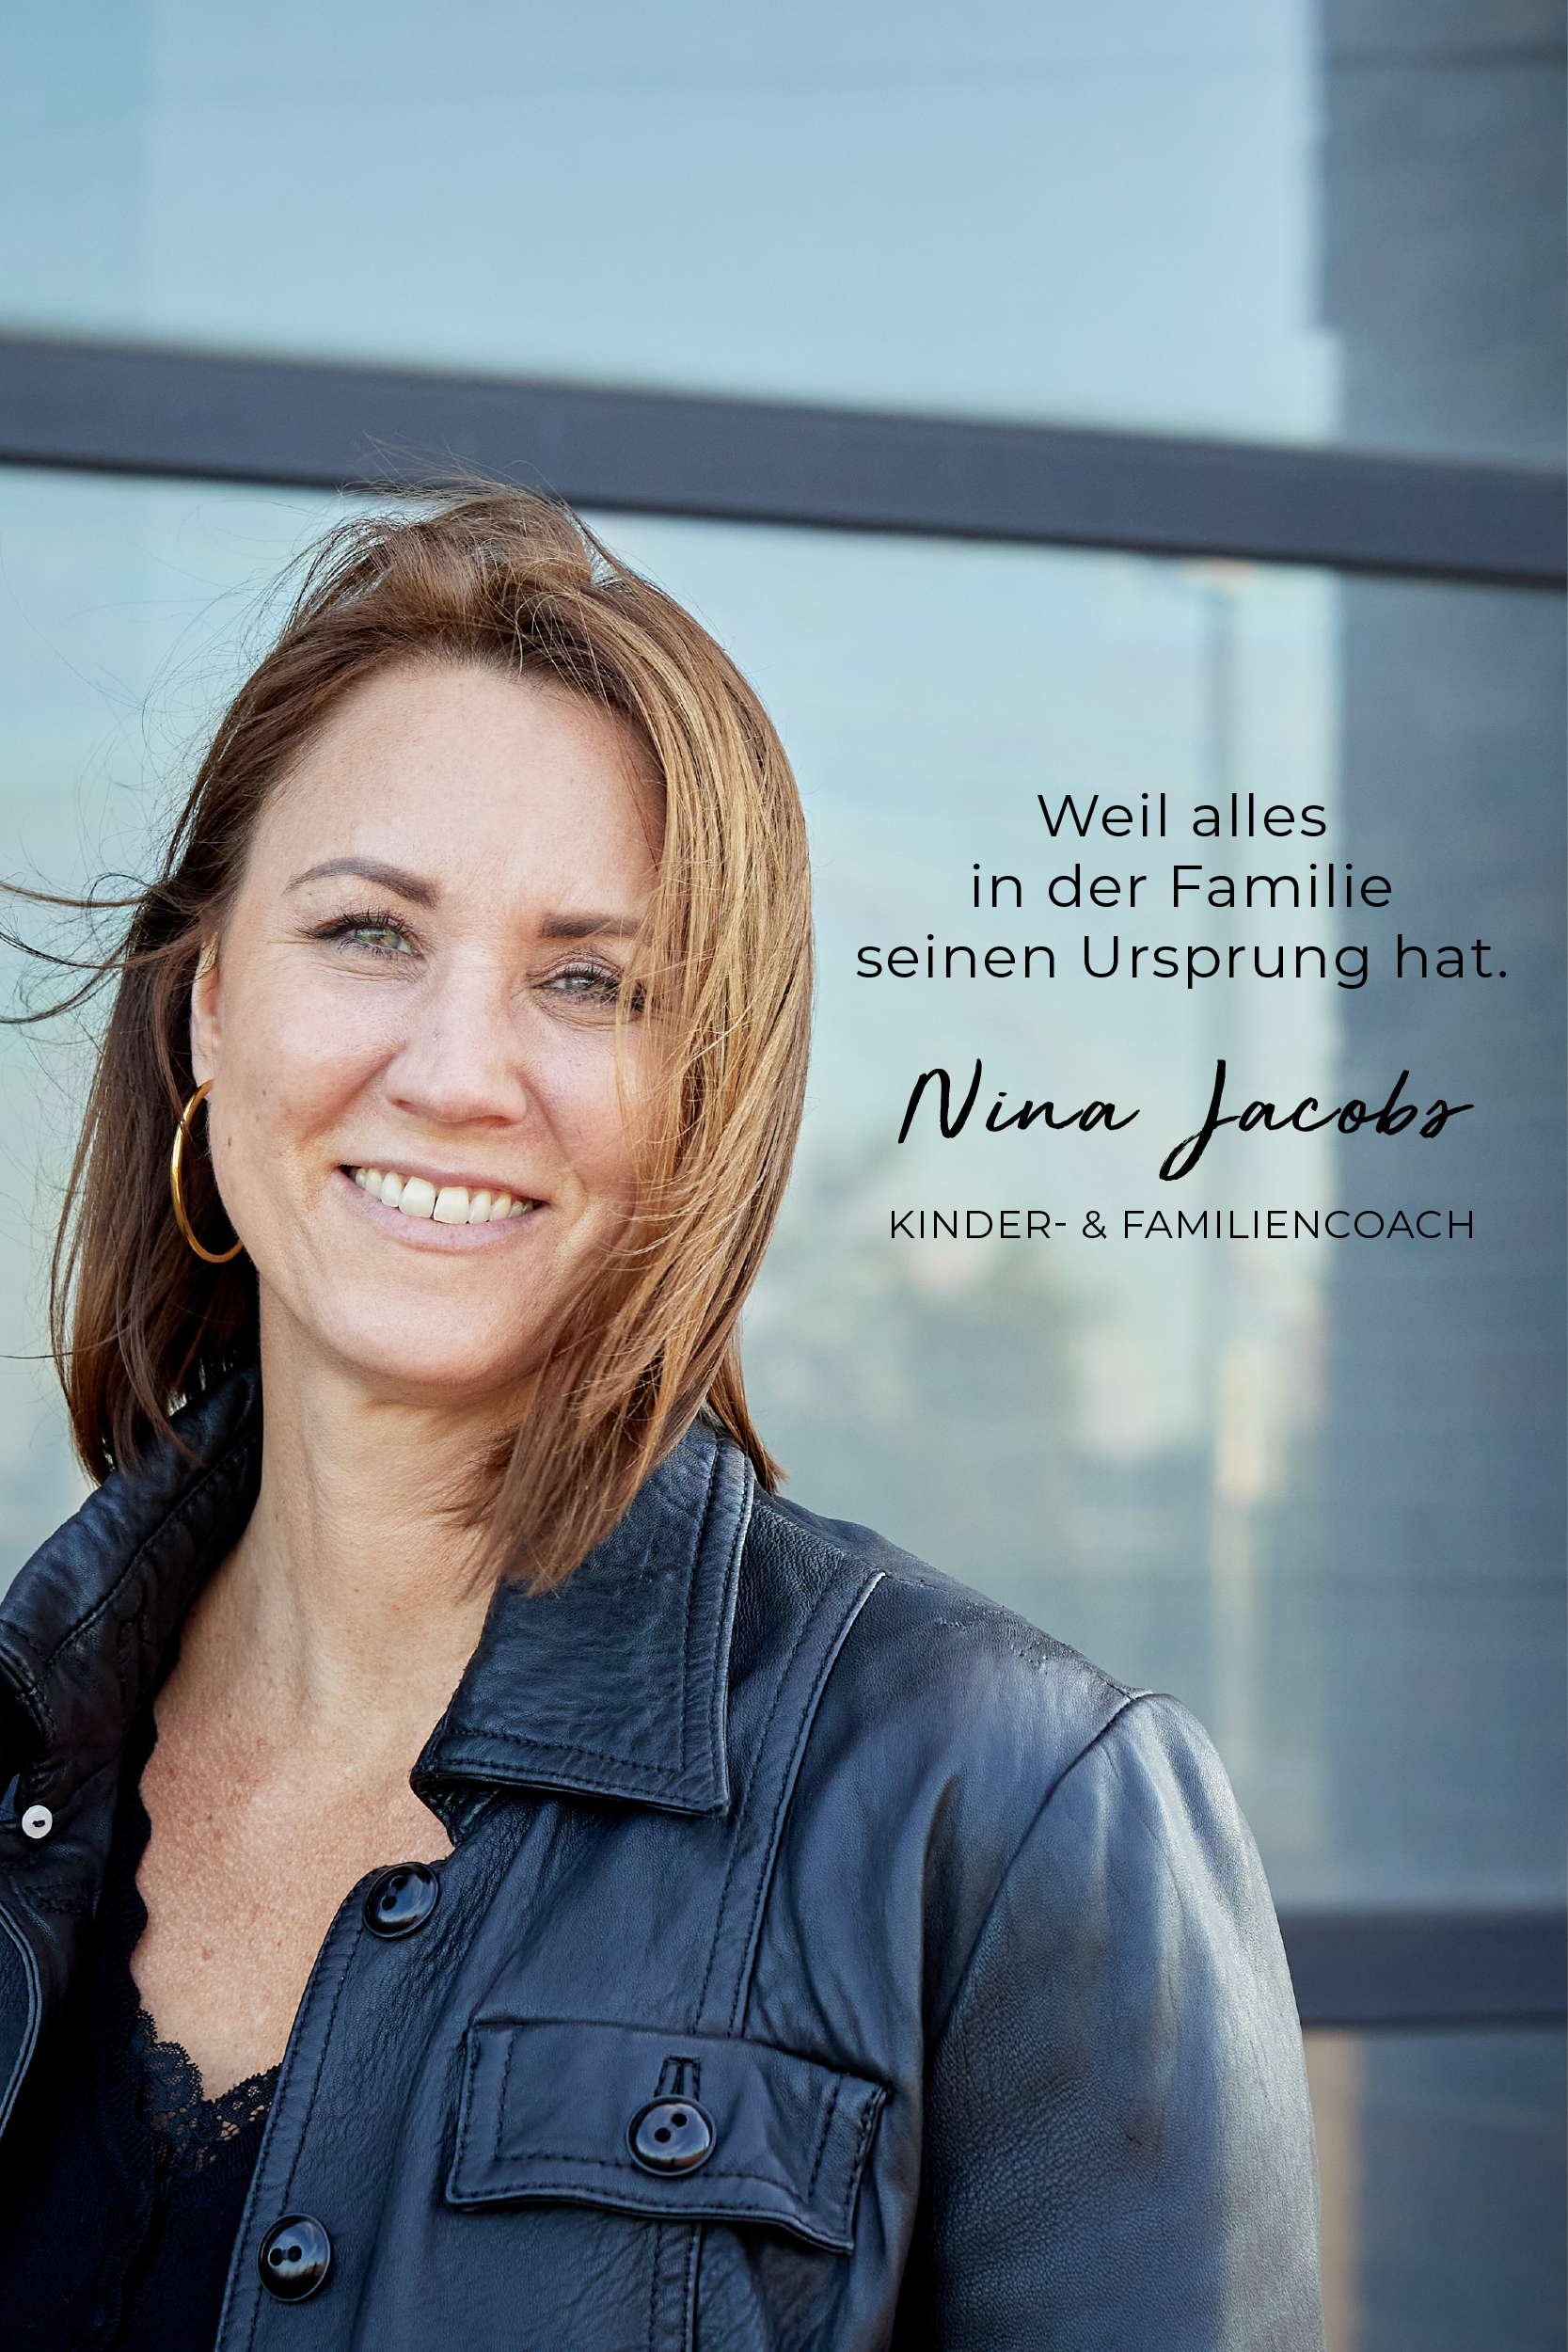 Nina Jacobs - Kinder- & Familiencoach